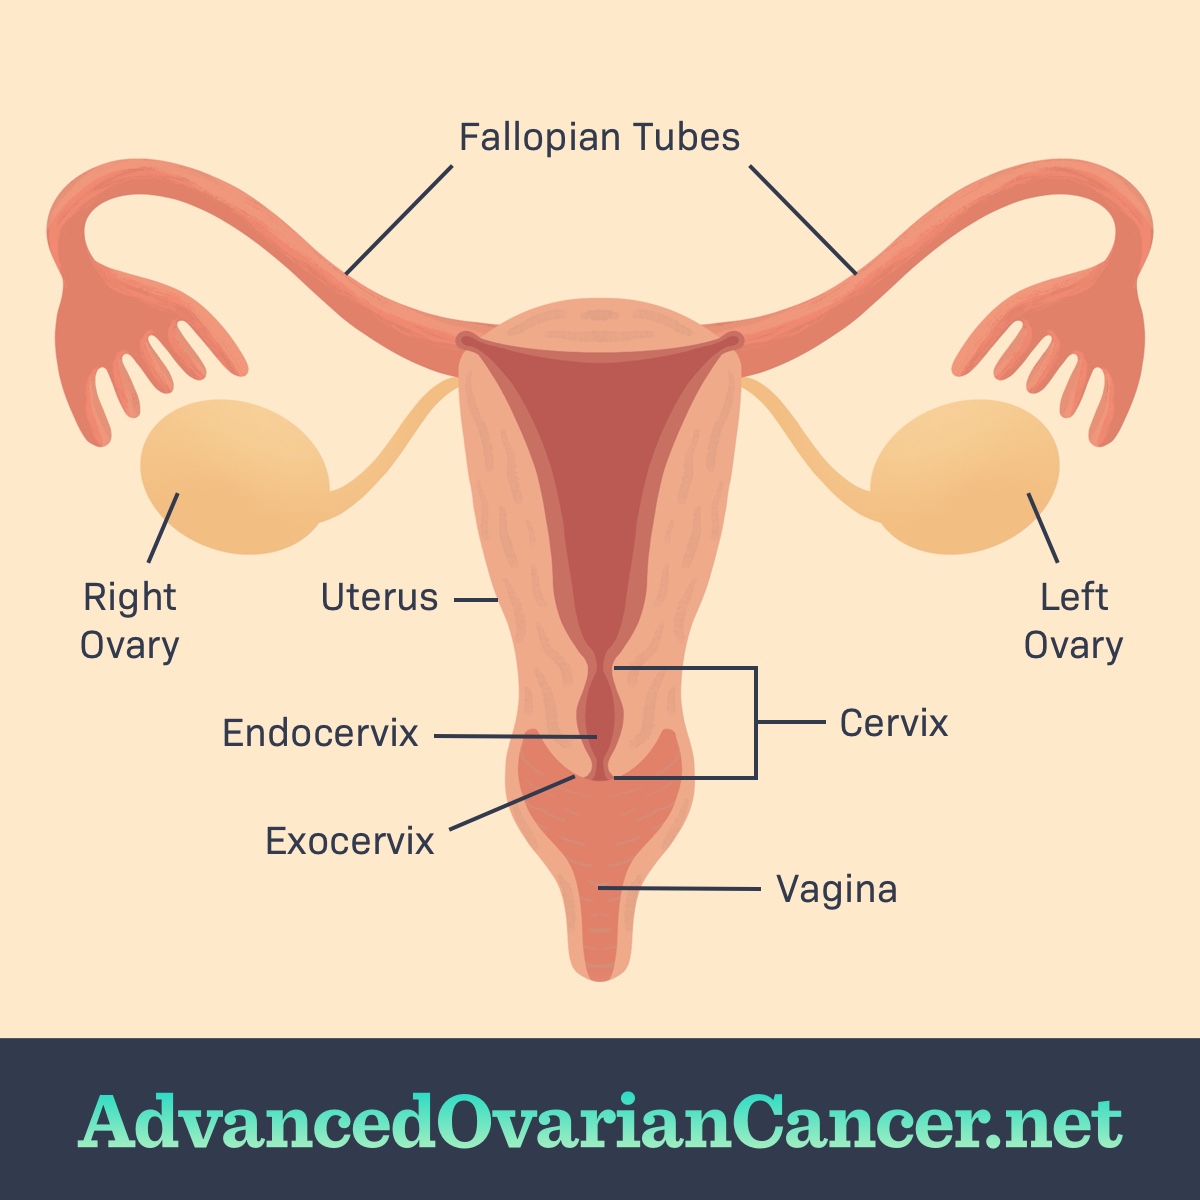 Female reproductive organs include the fallopian tubes, ovaries, uterus, cervix, endocervix, exocervix, and vagina.